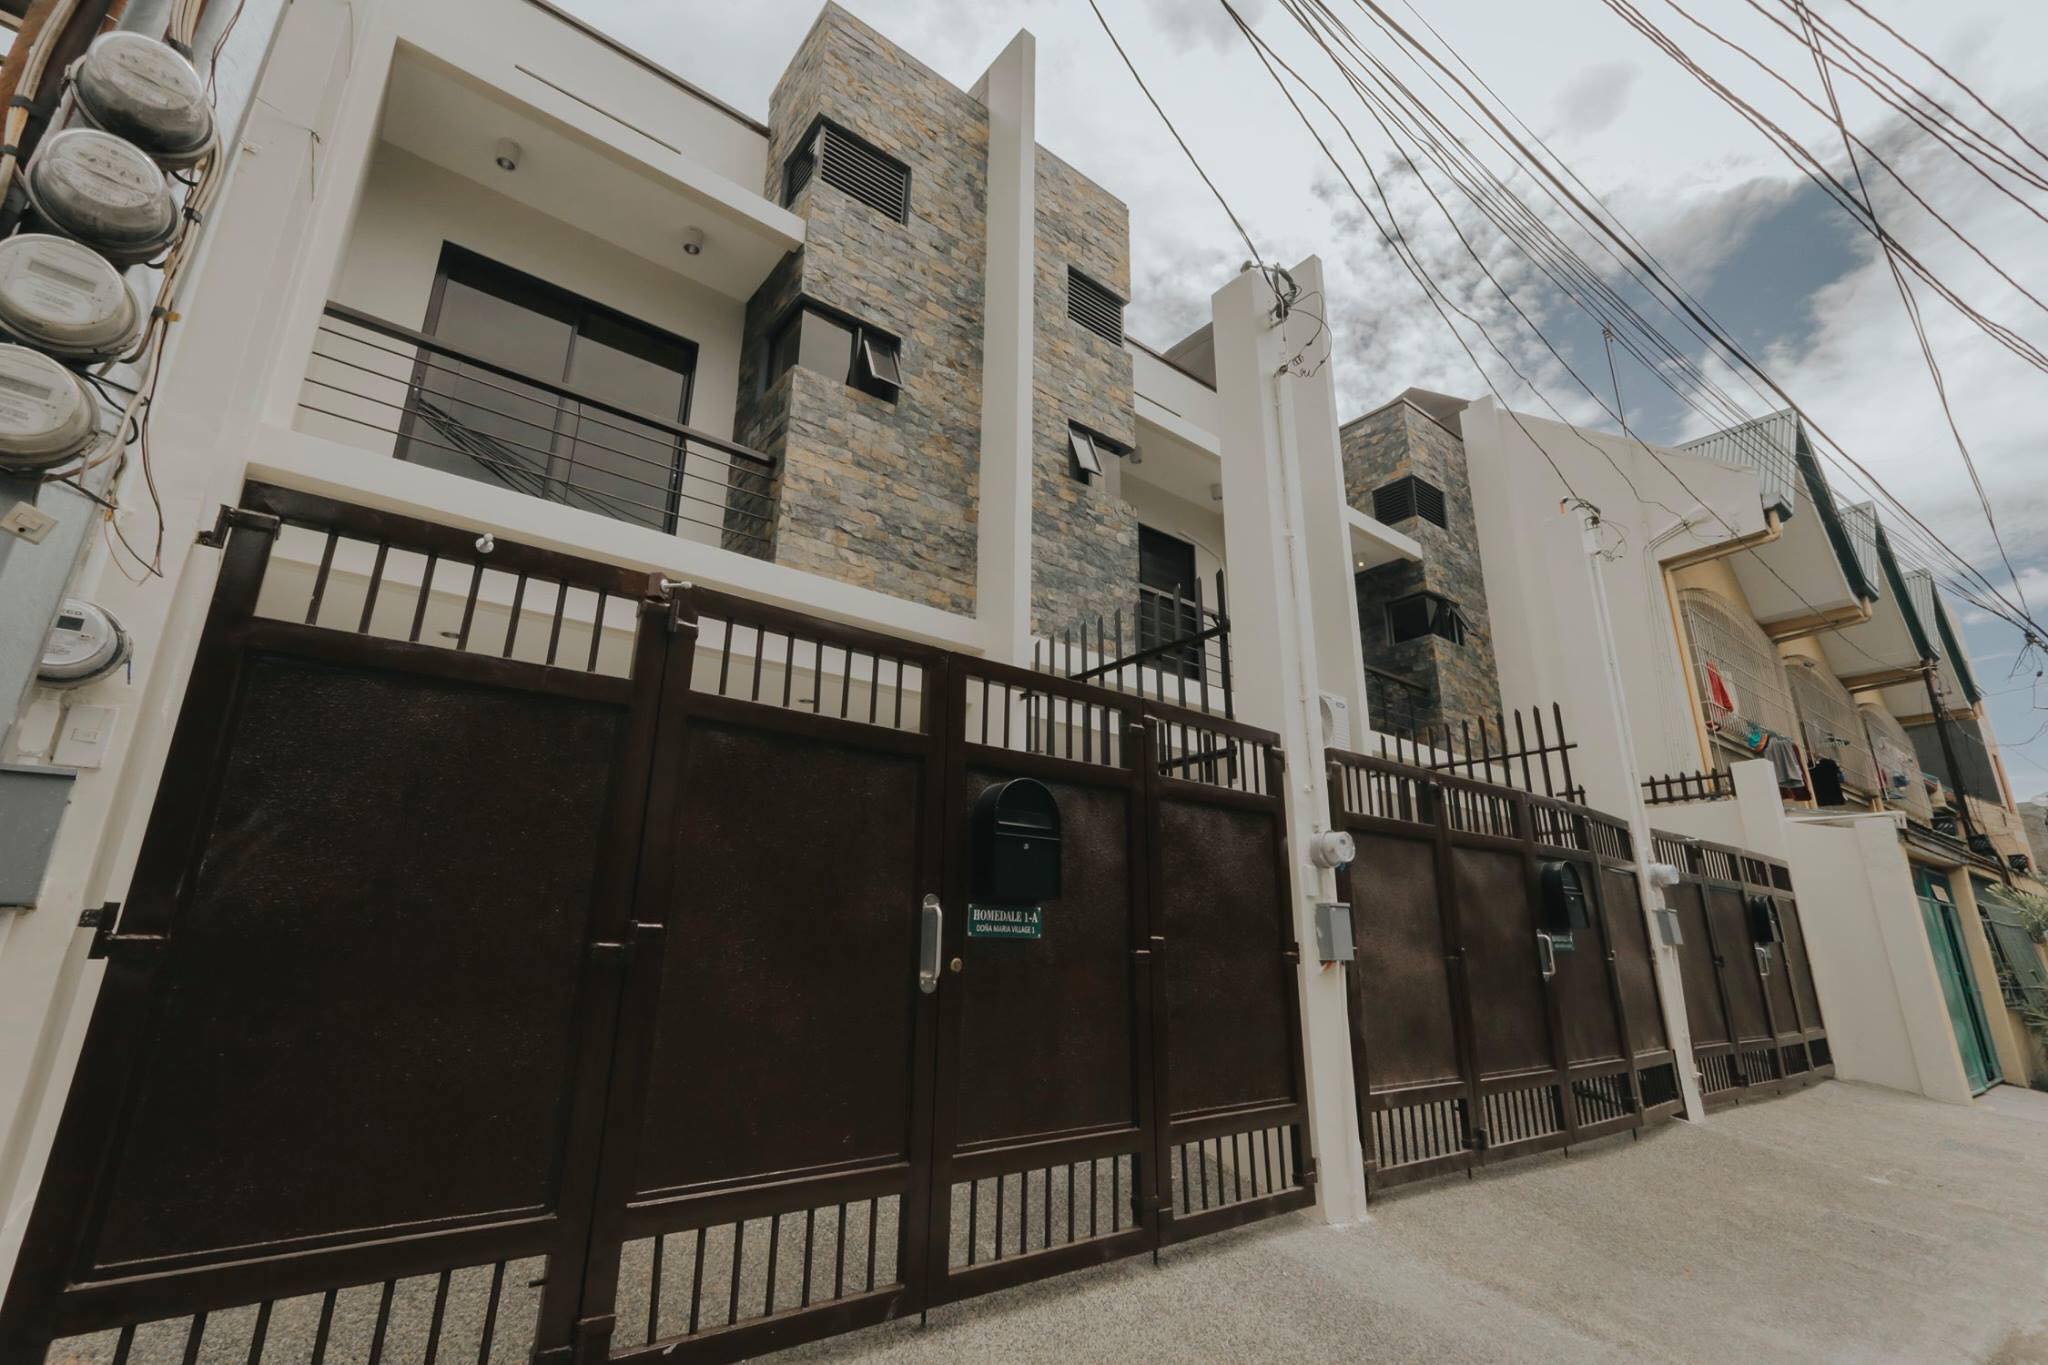 4BR RFO House For Sale 1unit left Punta Princesa Cebu City